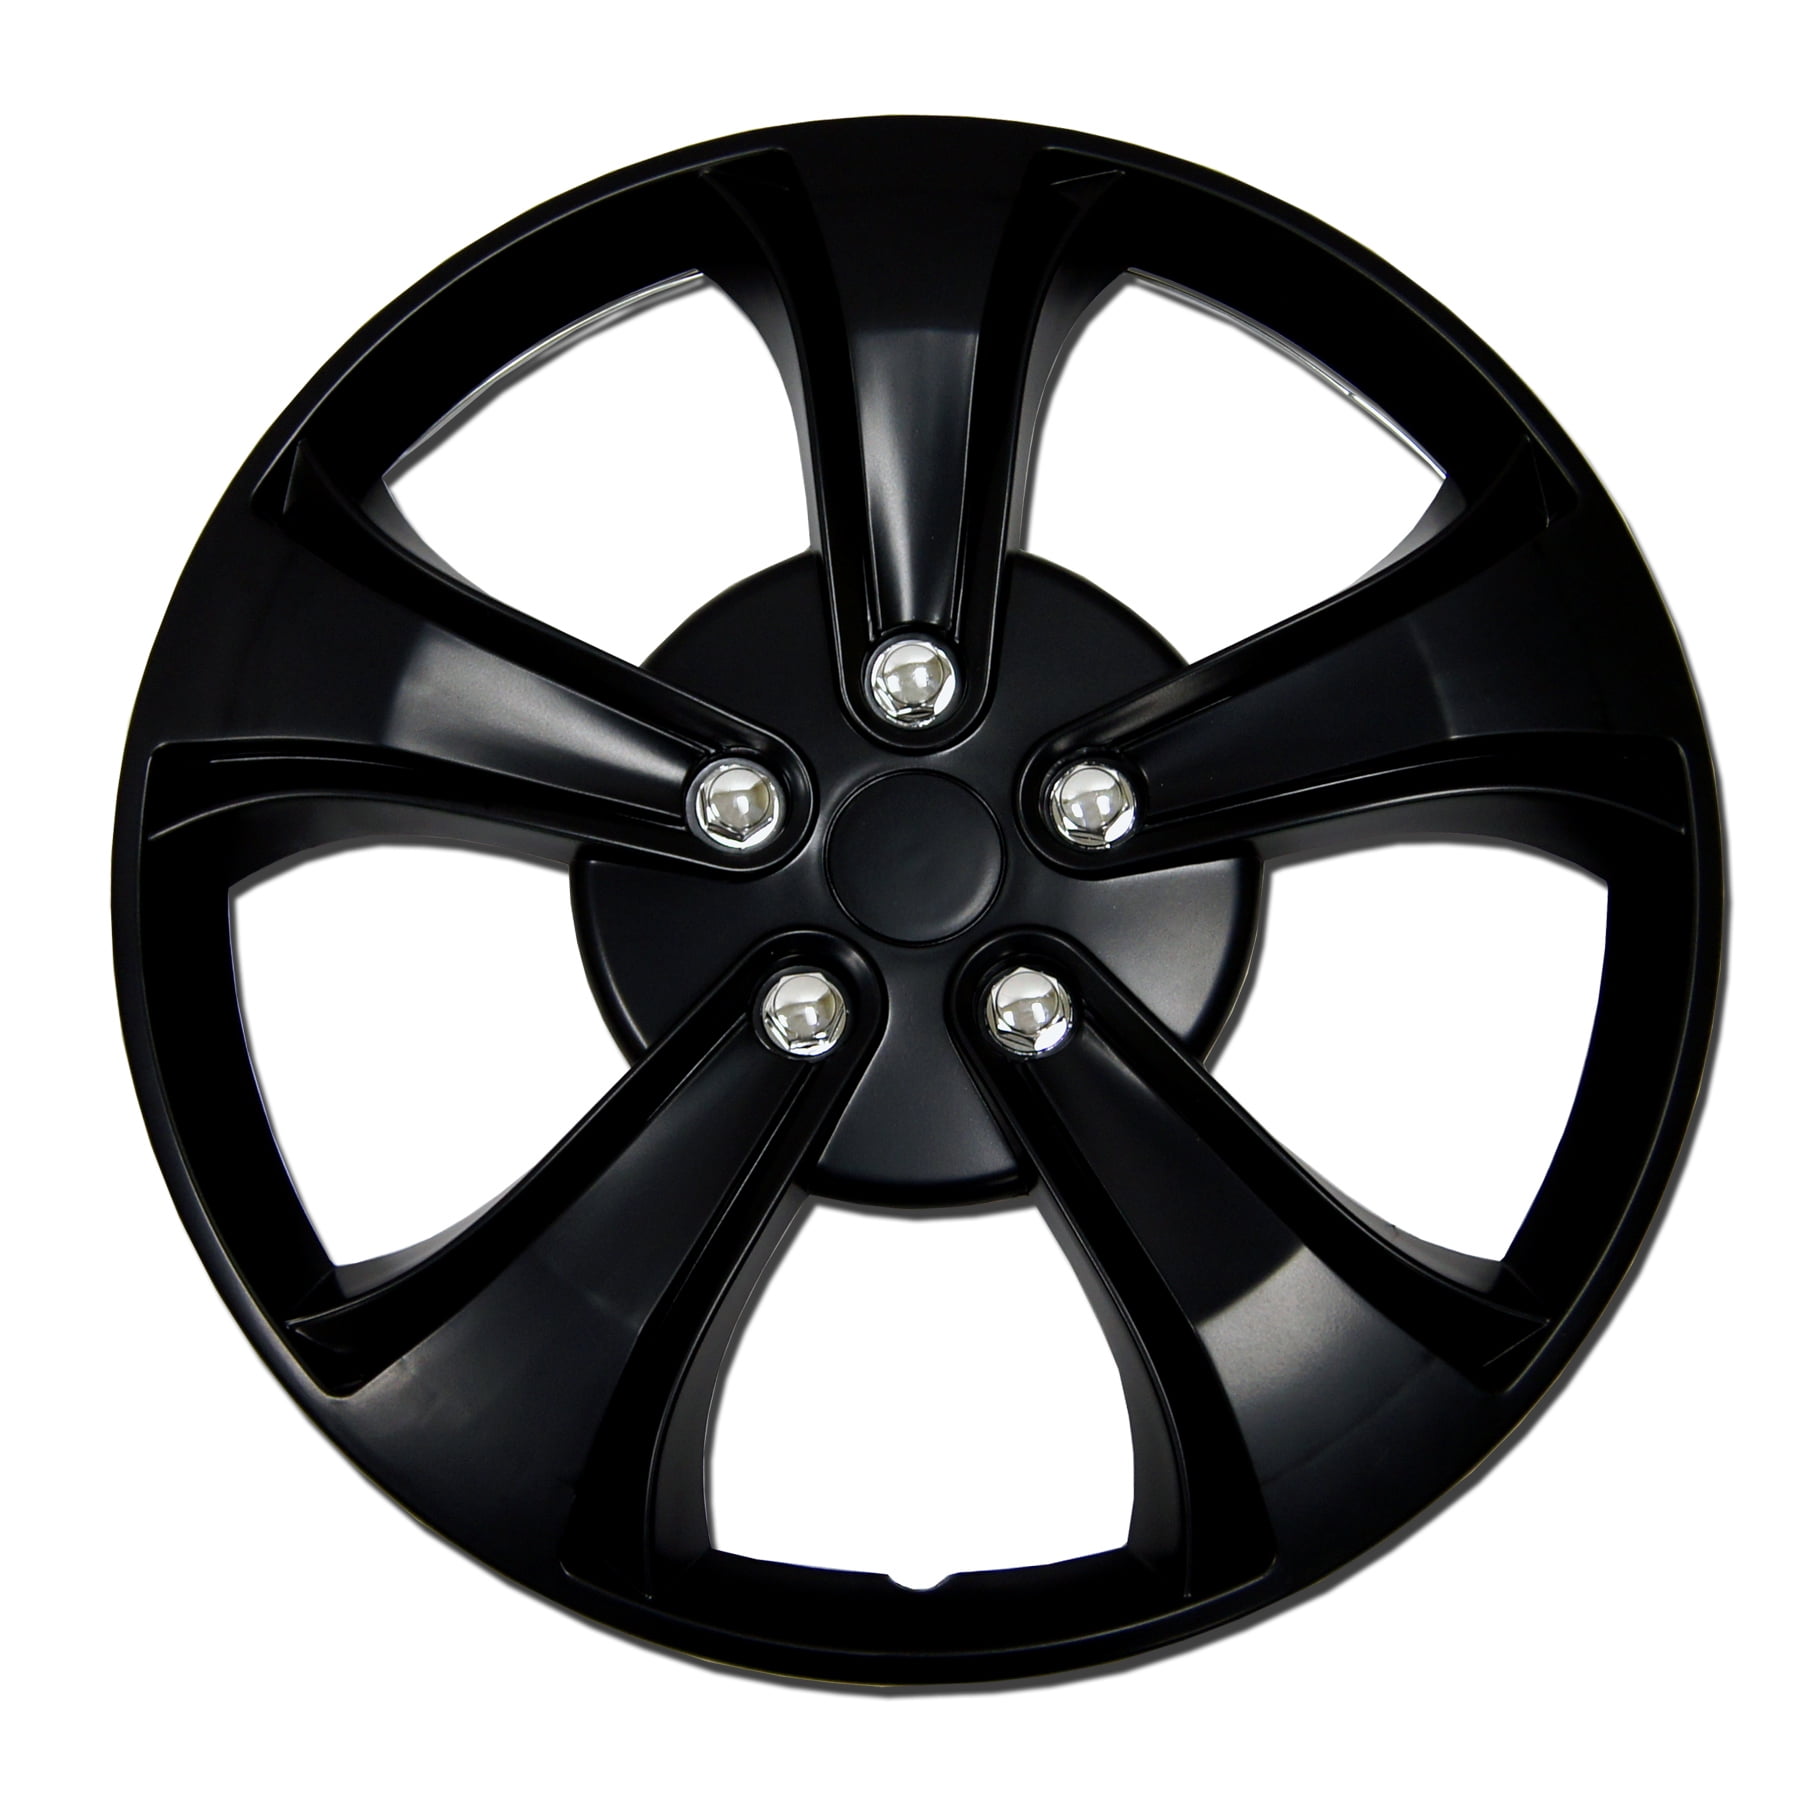 For Chevrolet 15 inch Black Hubcaps Wheel Covers Full Lug Skin Hub Cap Set 522 